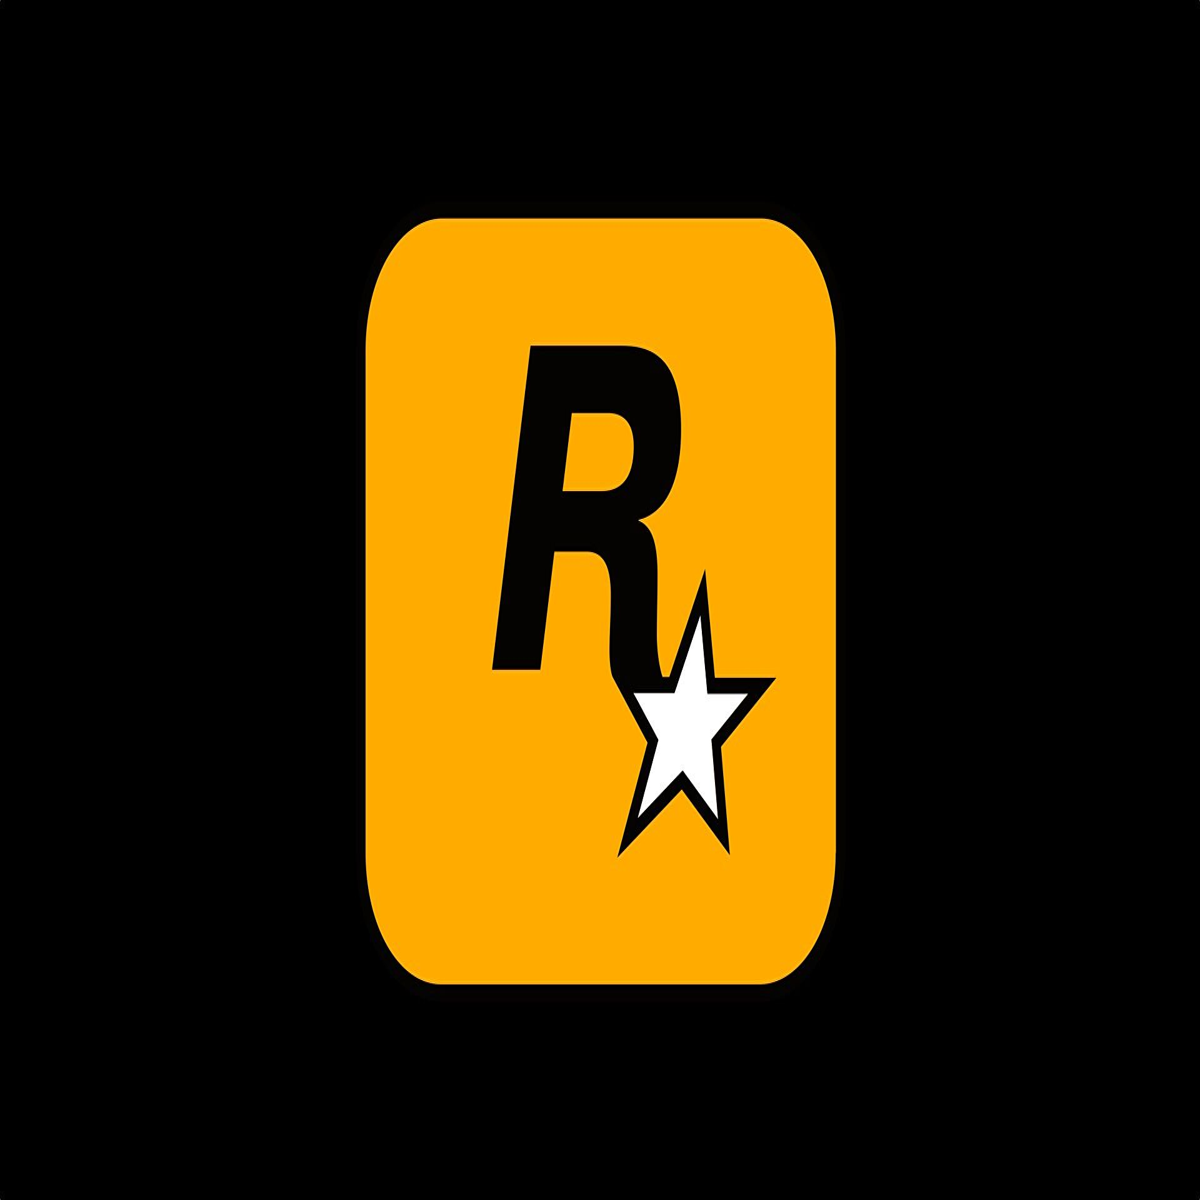 Rockstar Confirms Grand Theft Auto 6 Leak Was Stolen by Hacker